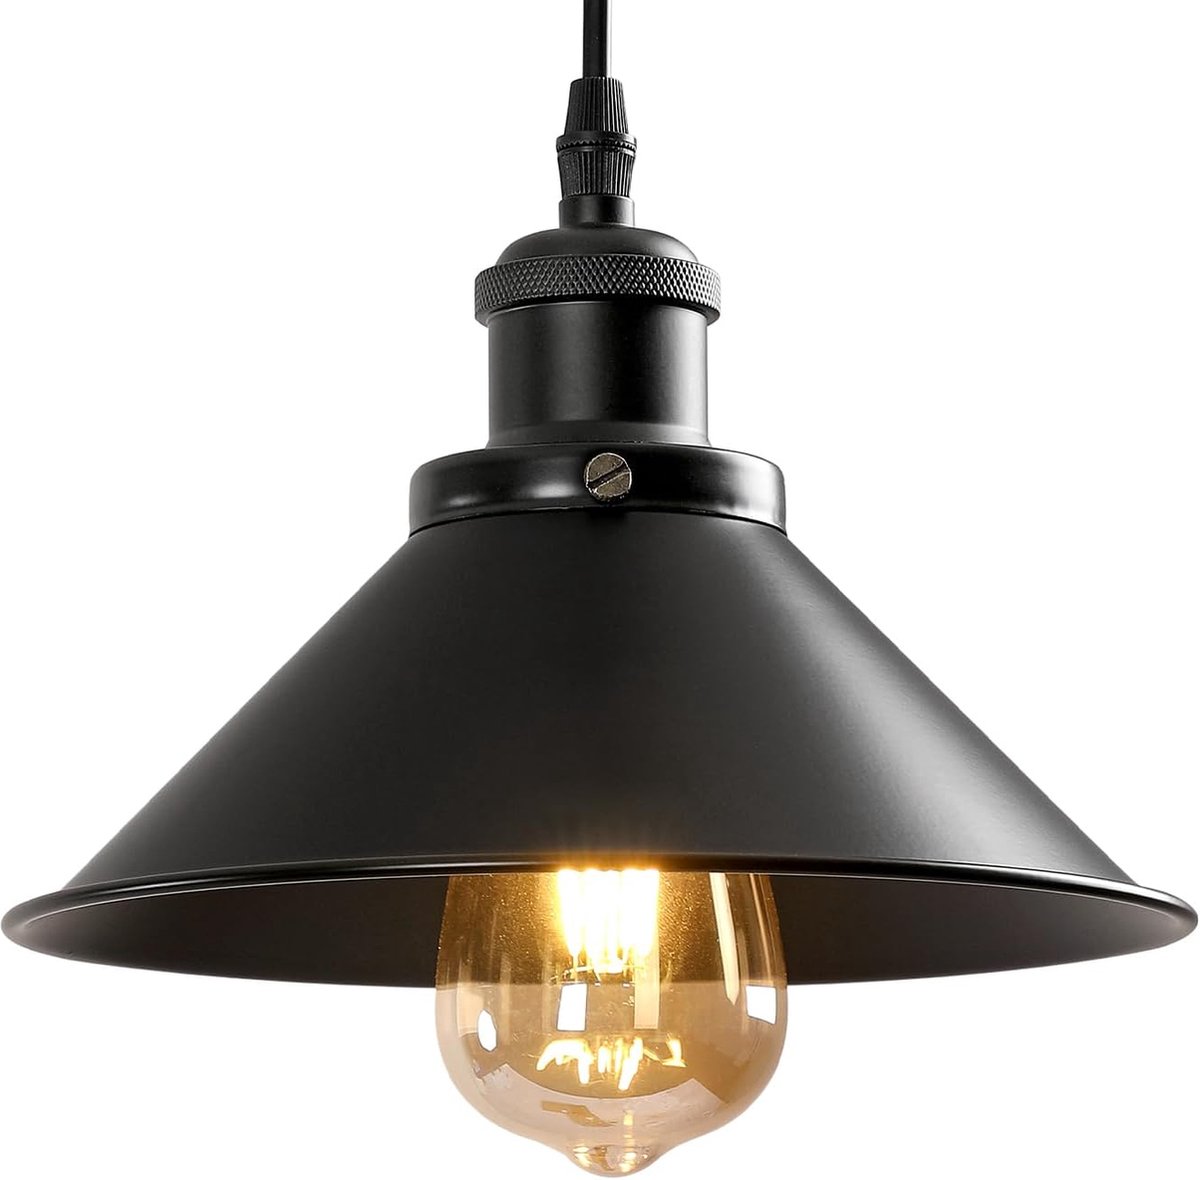 Delaveek Industriële Hanglamp- 22CM- Zwart- E27 Vintage Metalen Plafondlamp voor Keuken Café Bar Eetkamer Woonkamer,